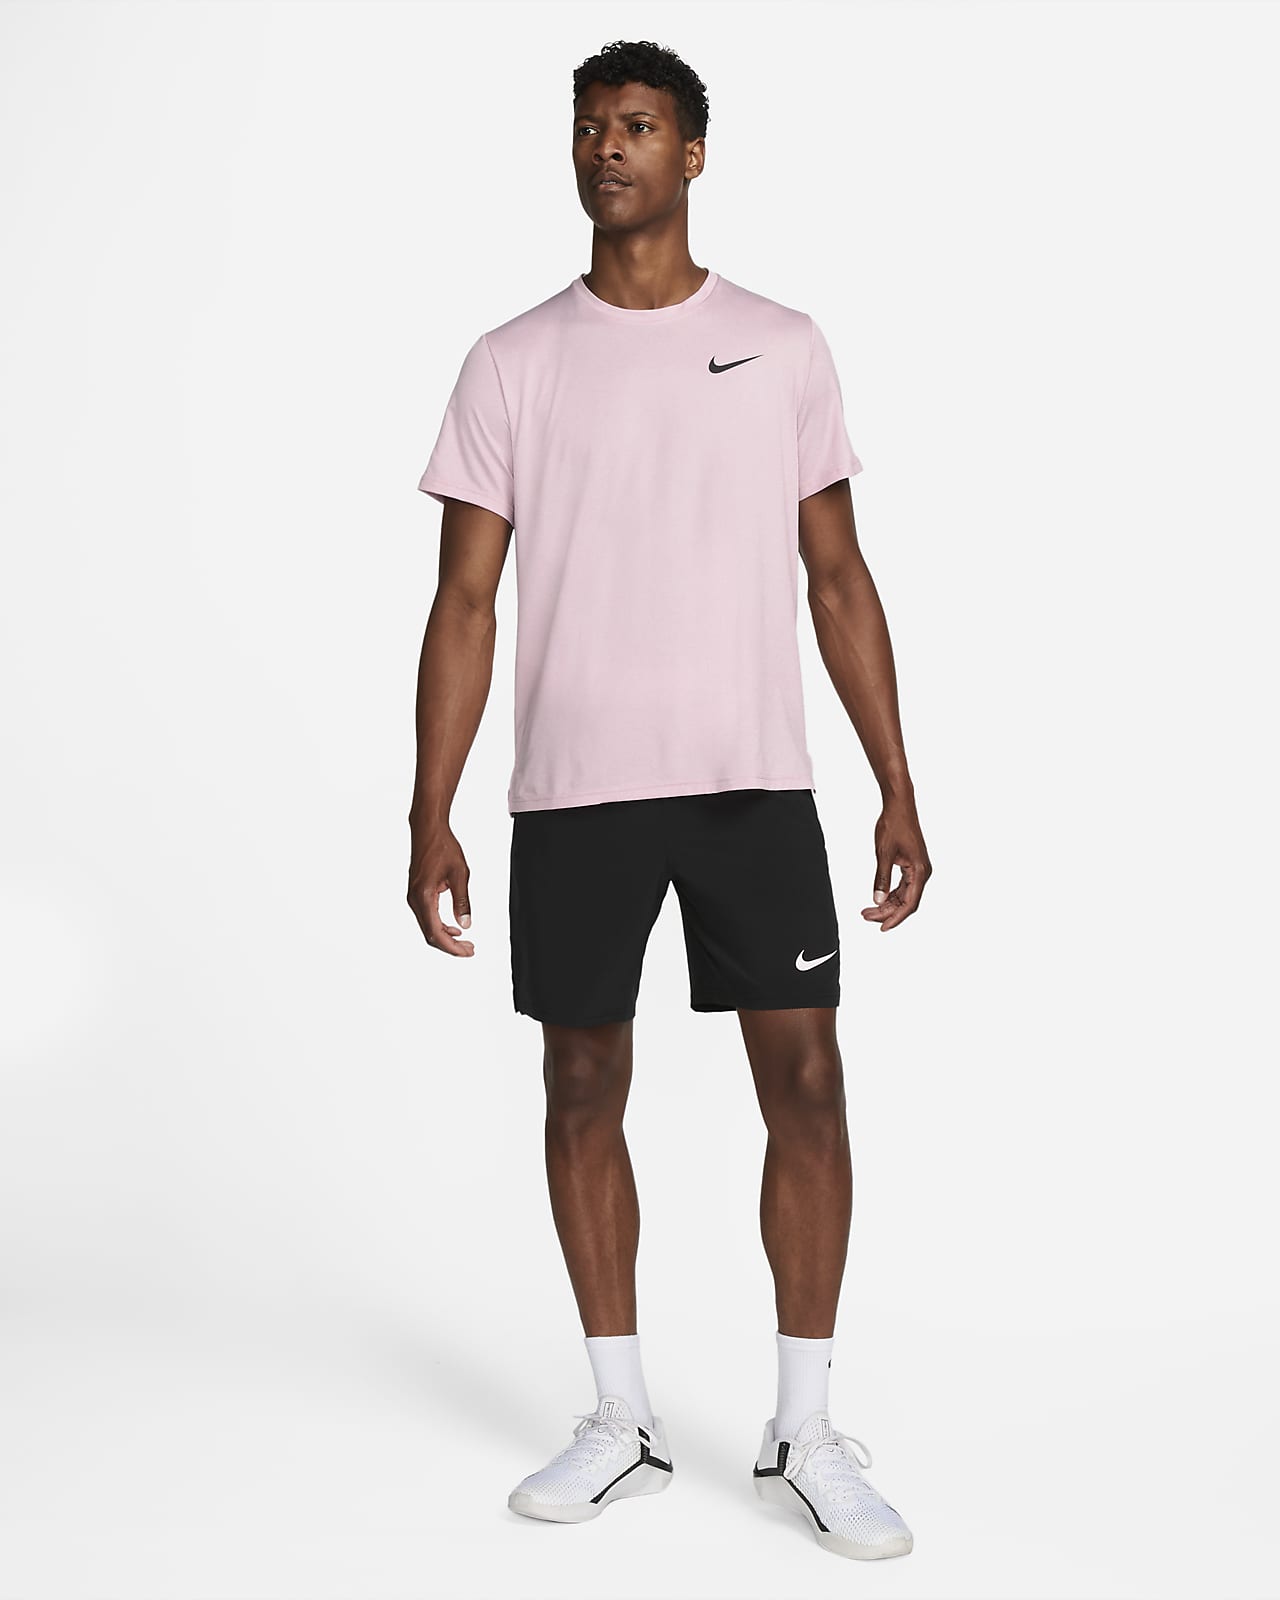 Nike Pro Dri-FIT Logo Men's Tennis Short Tights - Iron Grey/Black